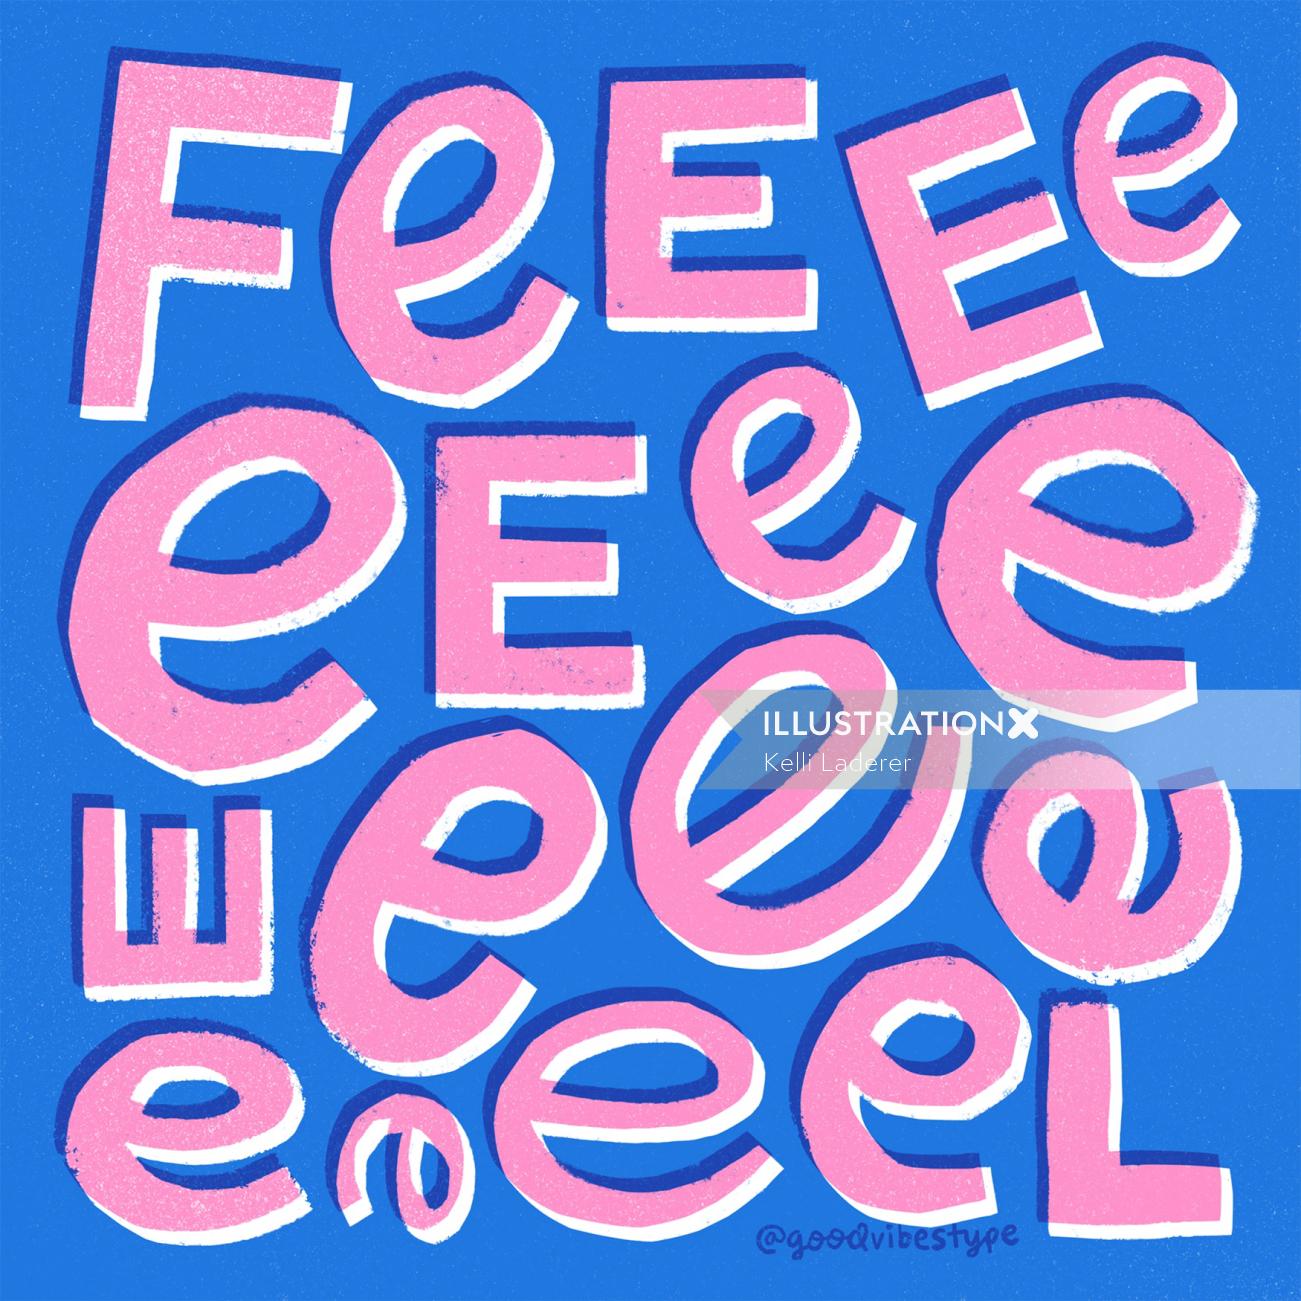 Feel lettering by Kelli Laderer